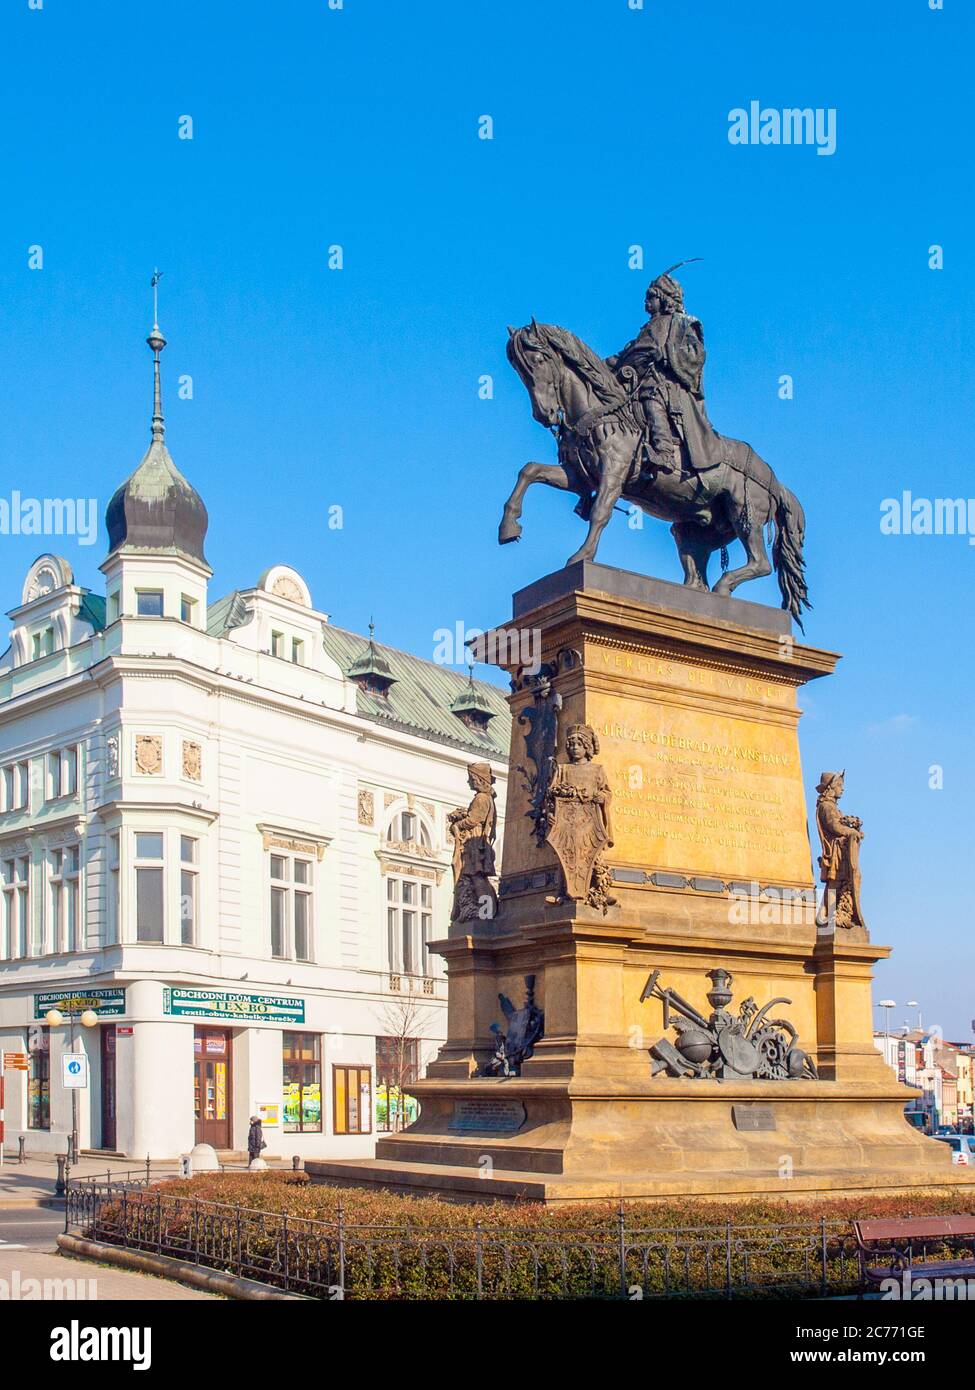 PODEBRADY, CZECH REPUBLIC - FEBRUARY 26, 2018: Equestrian statue of George of Podebrady, Jiri z Podebrad, in Podebrady, Czech Republic. Stock Photo